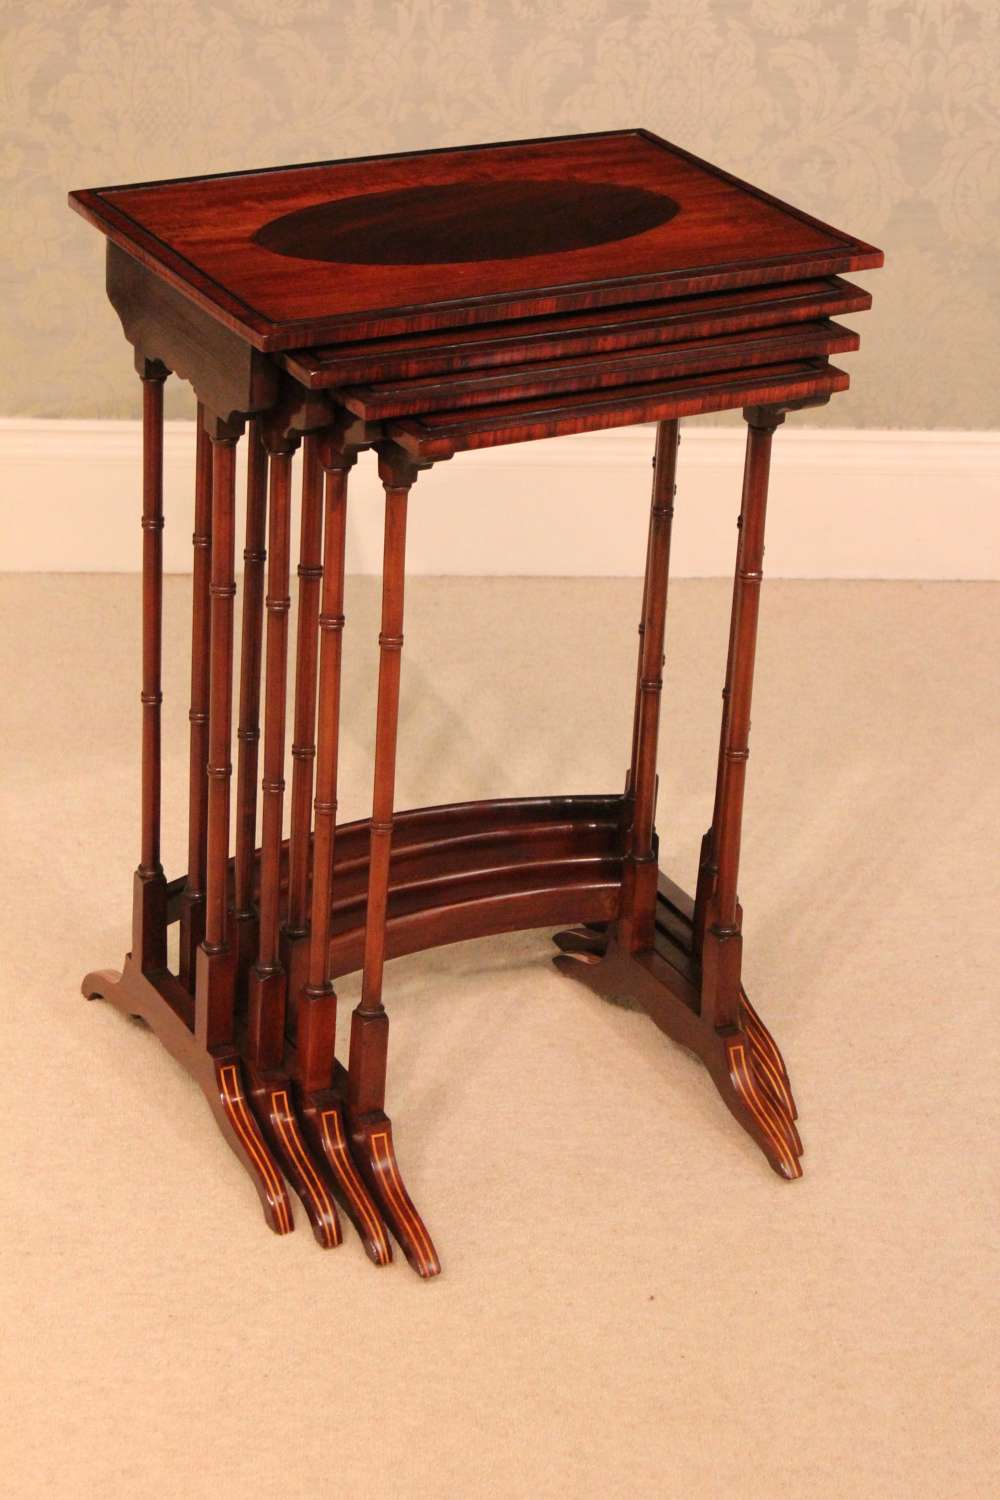 The Quality Late Victorian Mahogany Inlaid Quarteto Tables